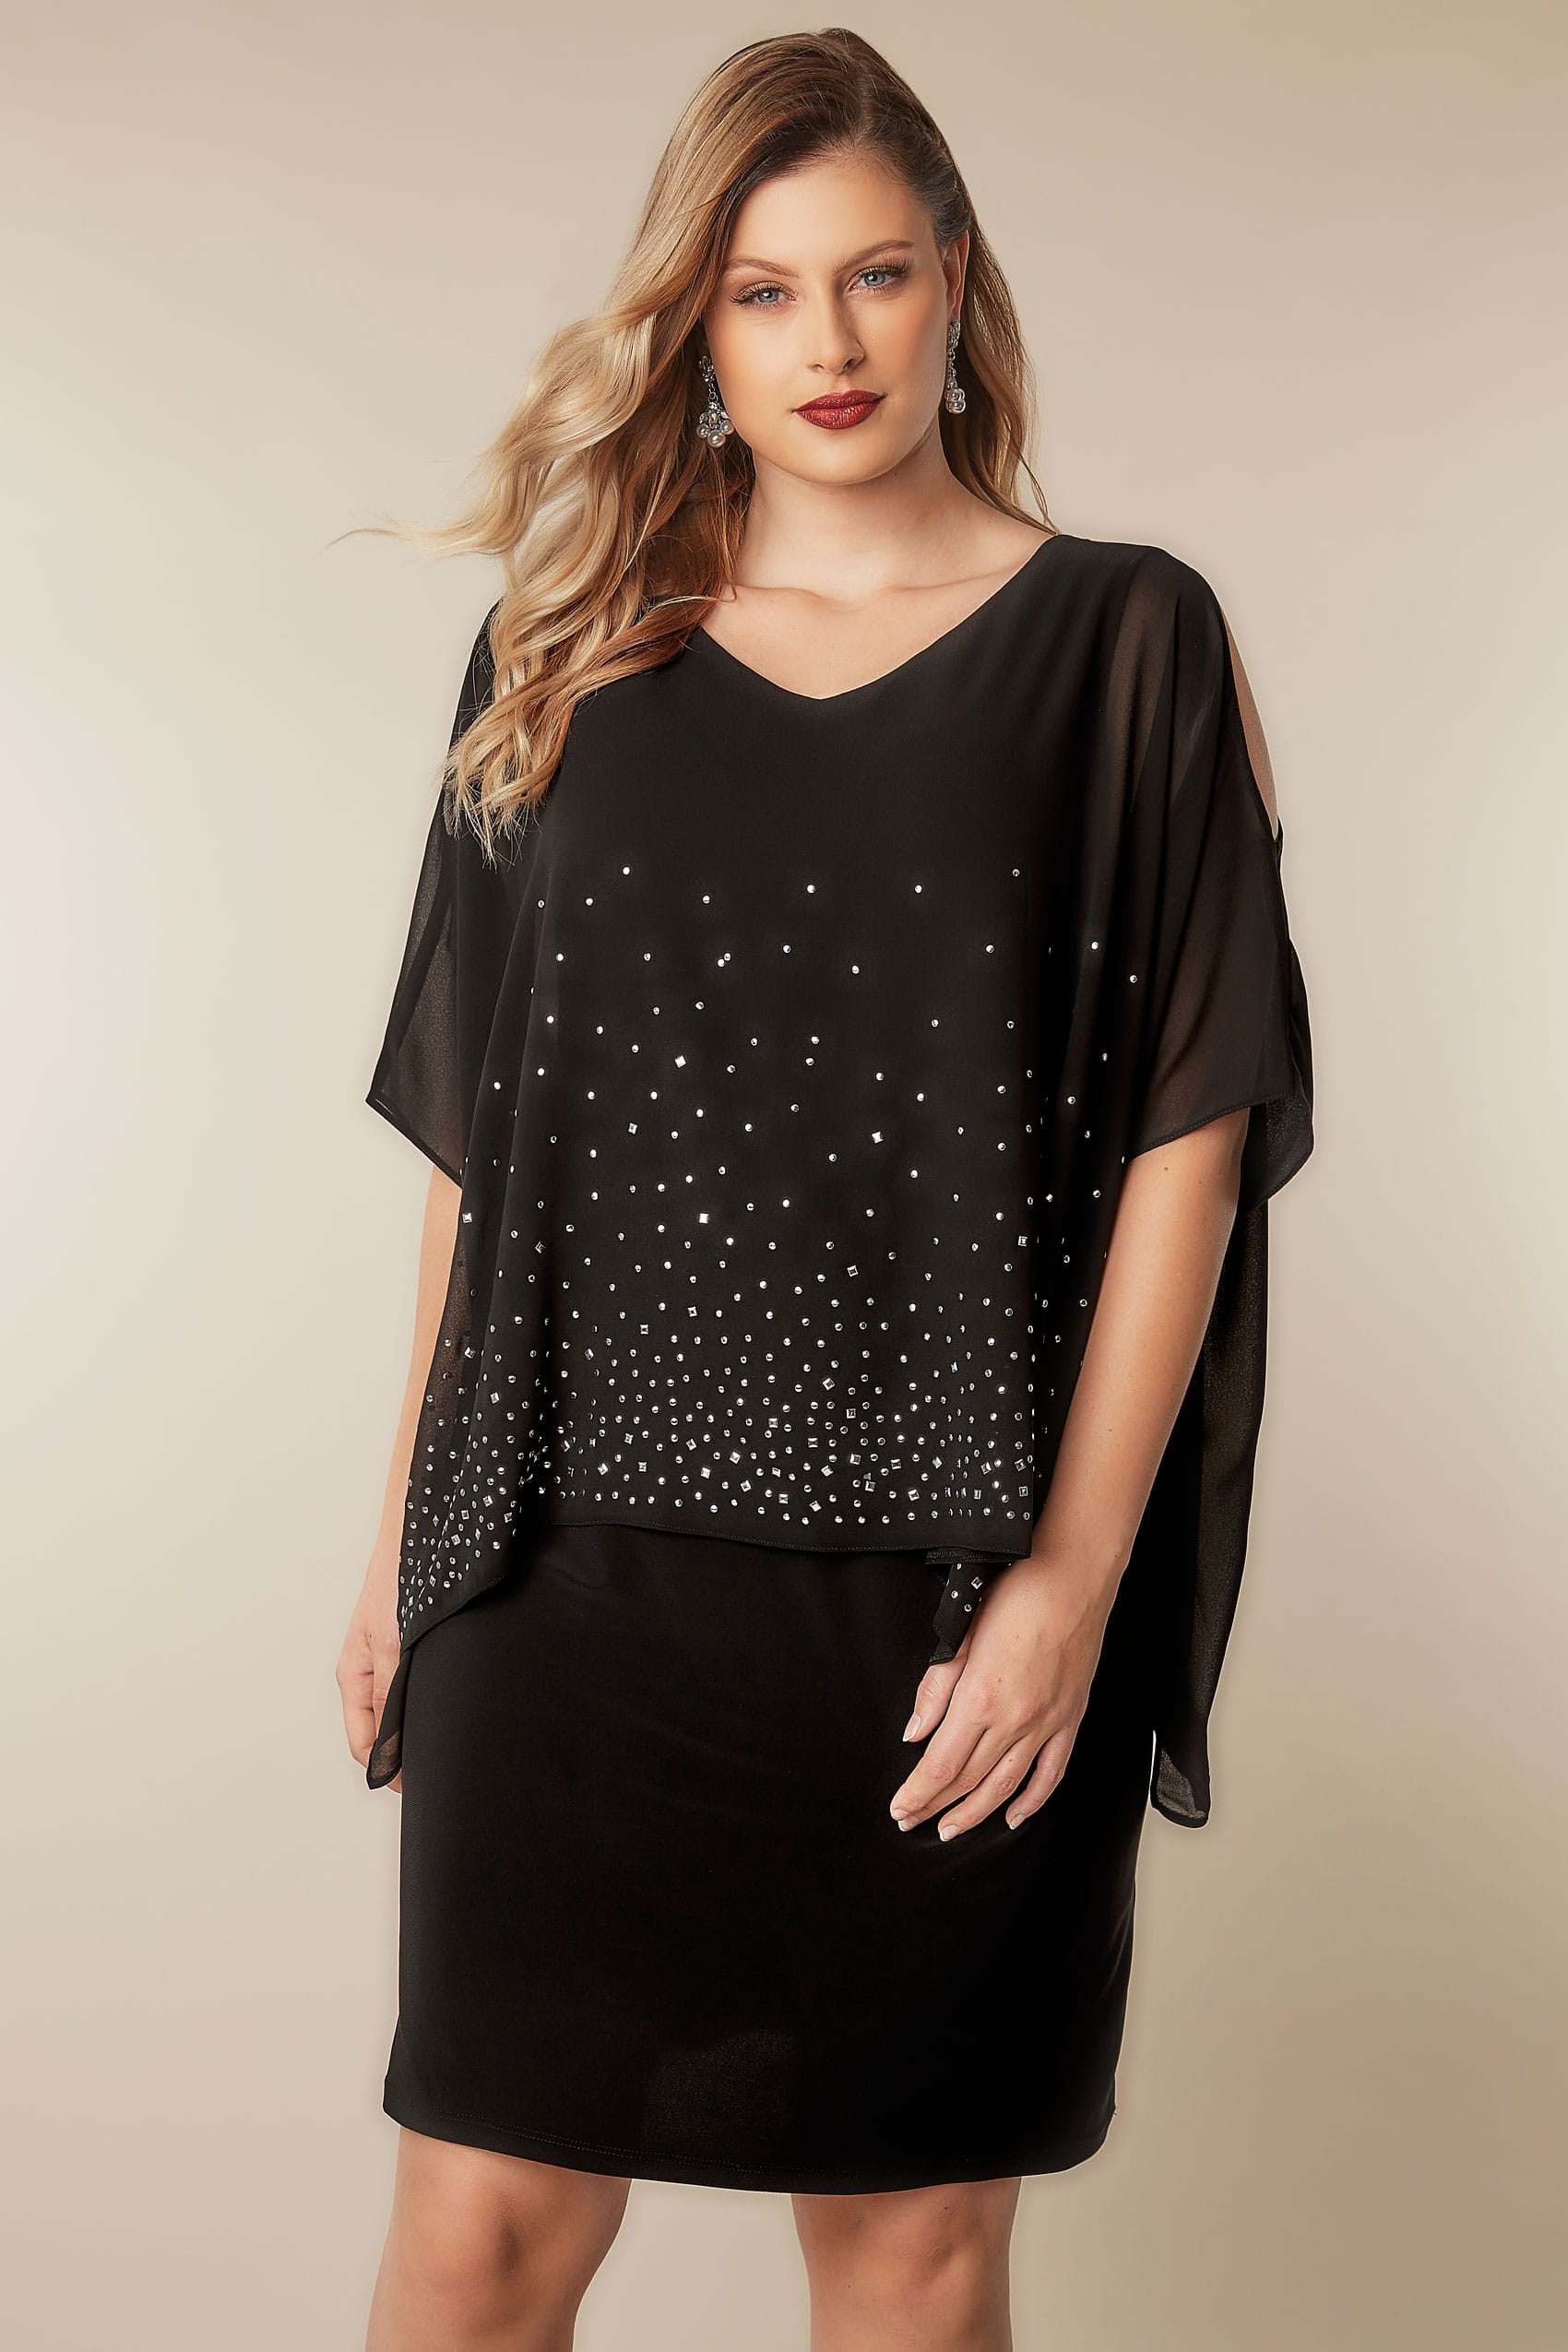 Black Studded Layered Cape Dress, Plus size 16 to 36